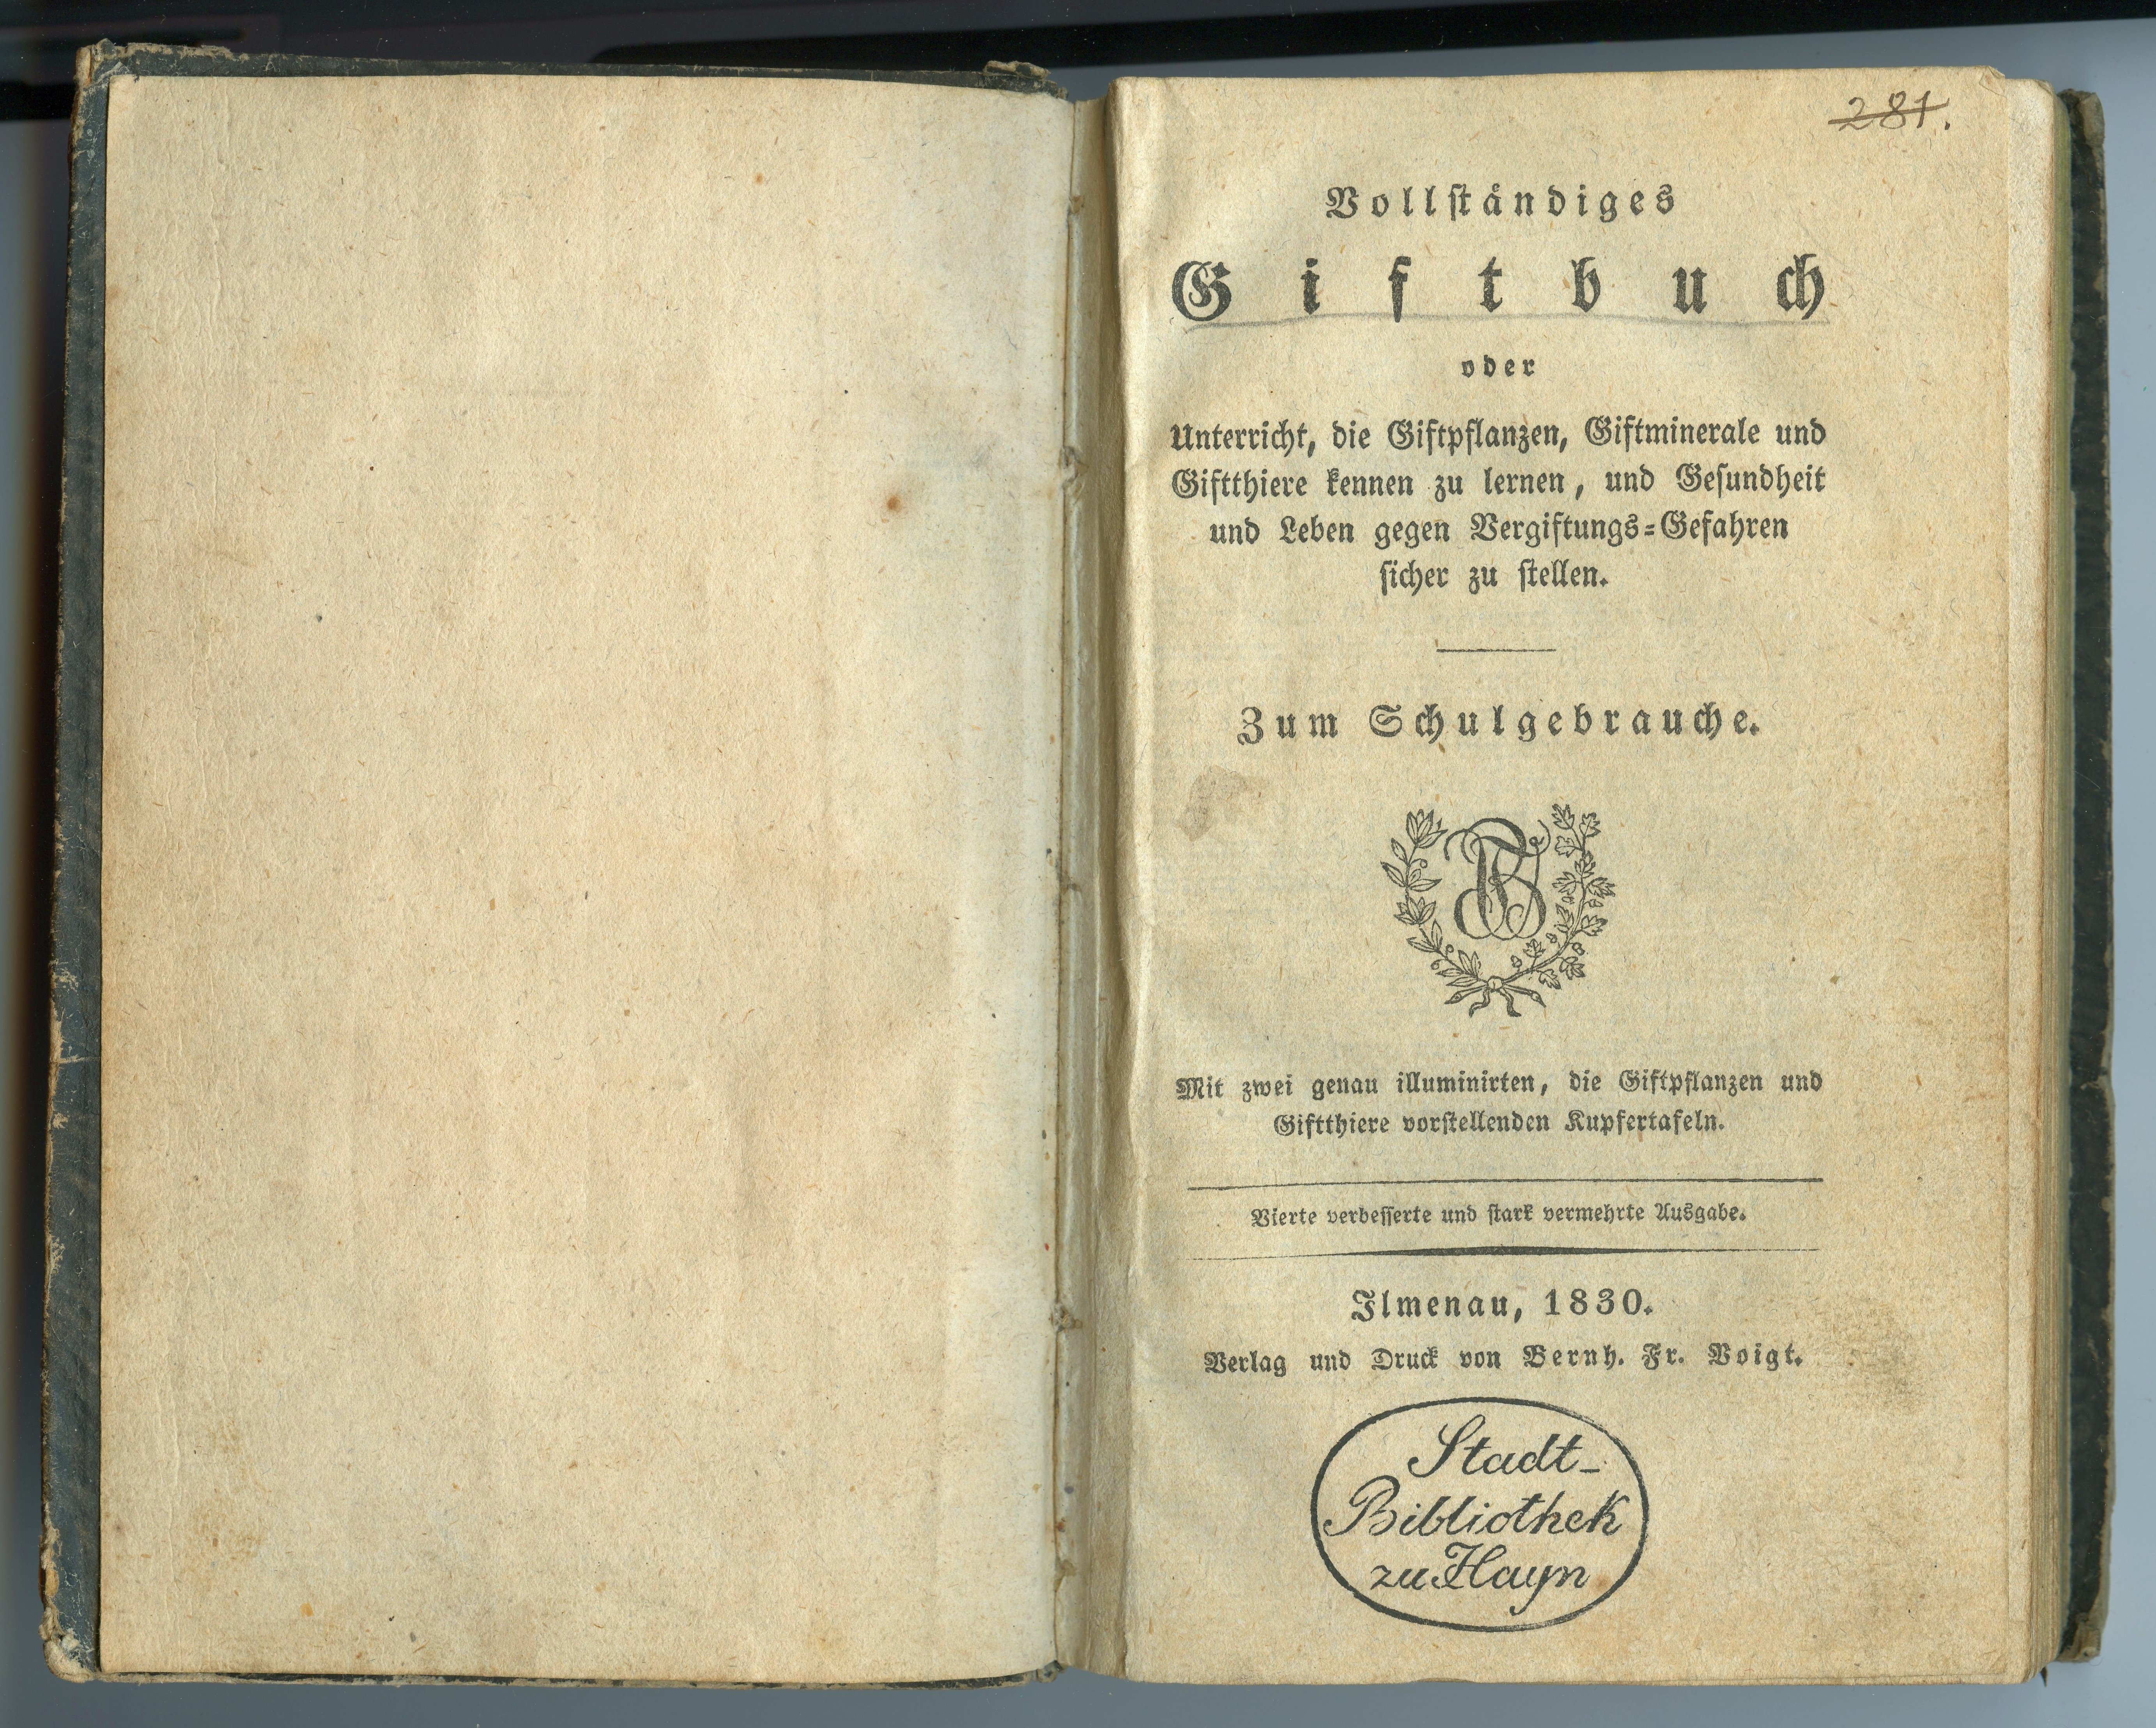 Vollständiges Giftbuch [...], 1830 (Museum Alte Lateinschule CC BY-NC-SA)